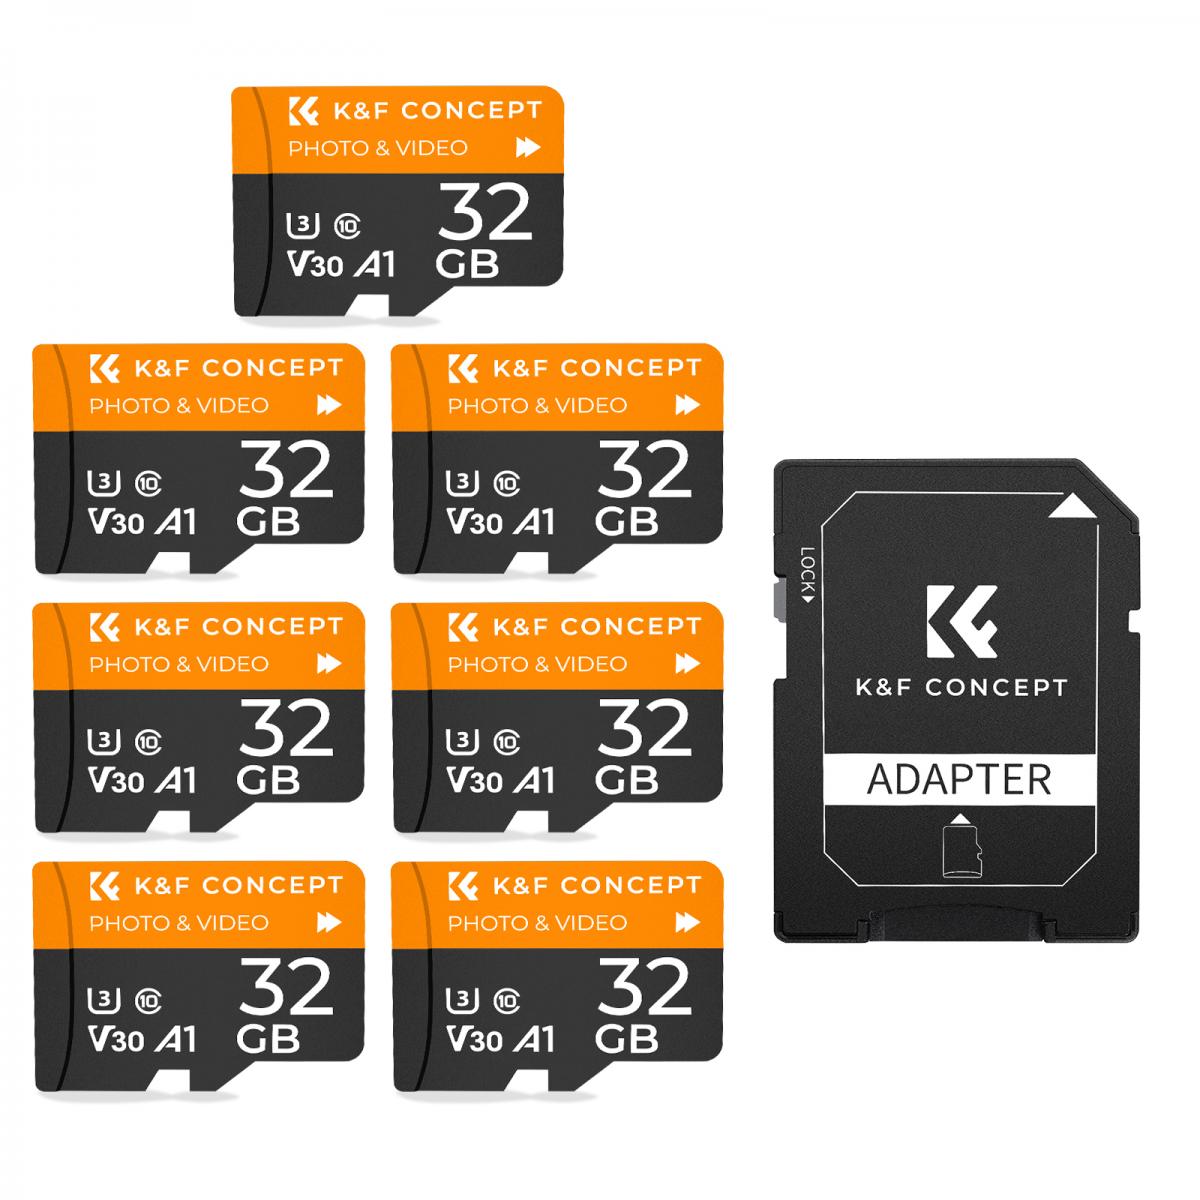 Carte mémoire micro SD 32 Go Evo avec adaptateur USB Samsung - Coquediscount